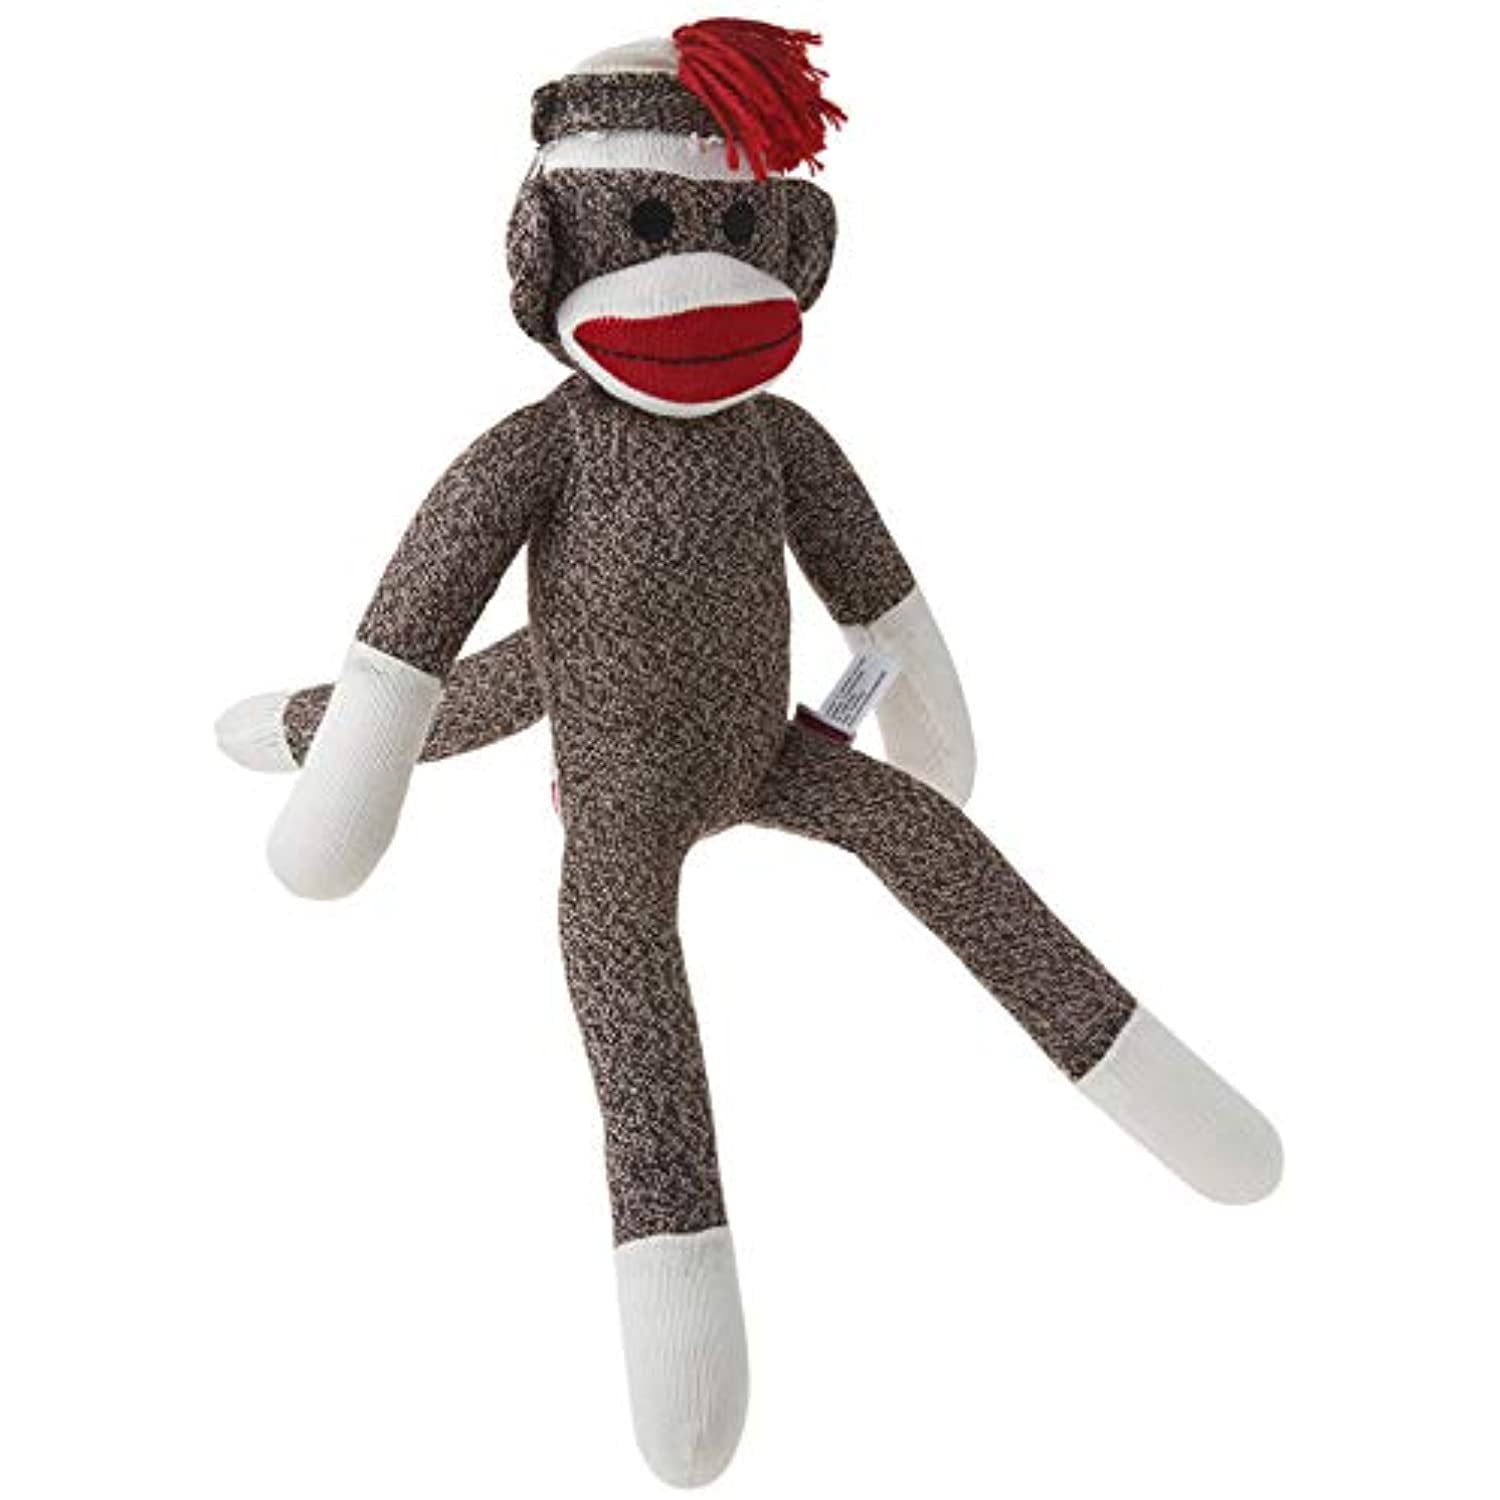 Handmade Black & White Striped Traditional Sock Monkey Doll Baby Gift Toy